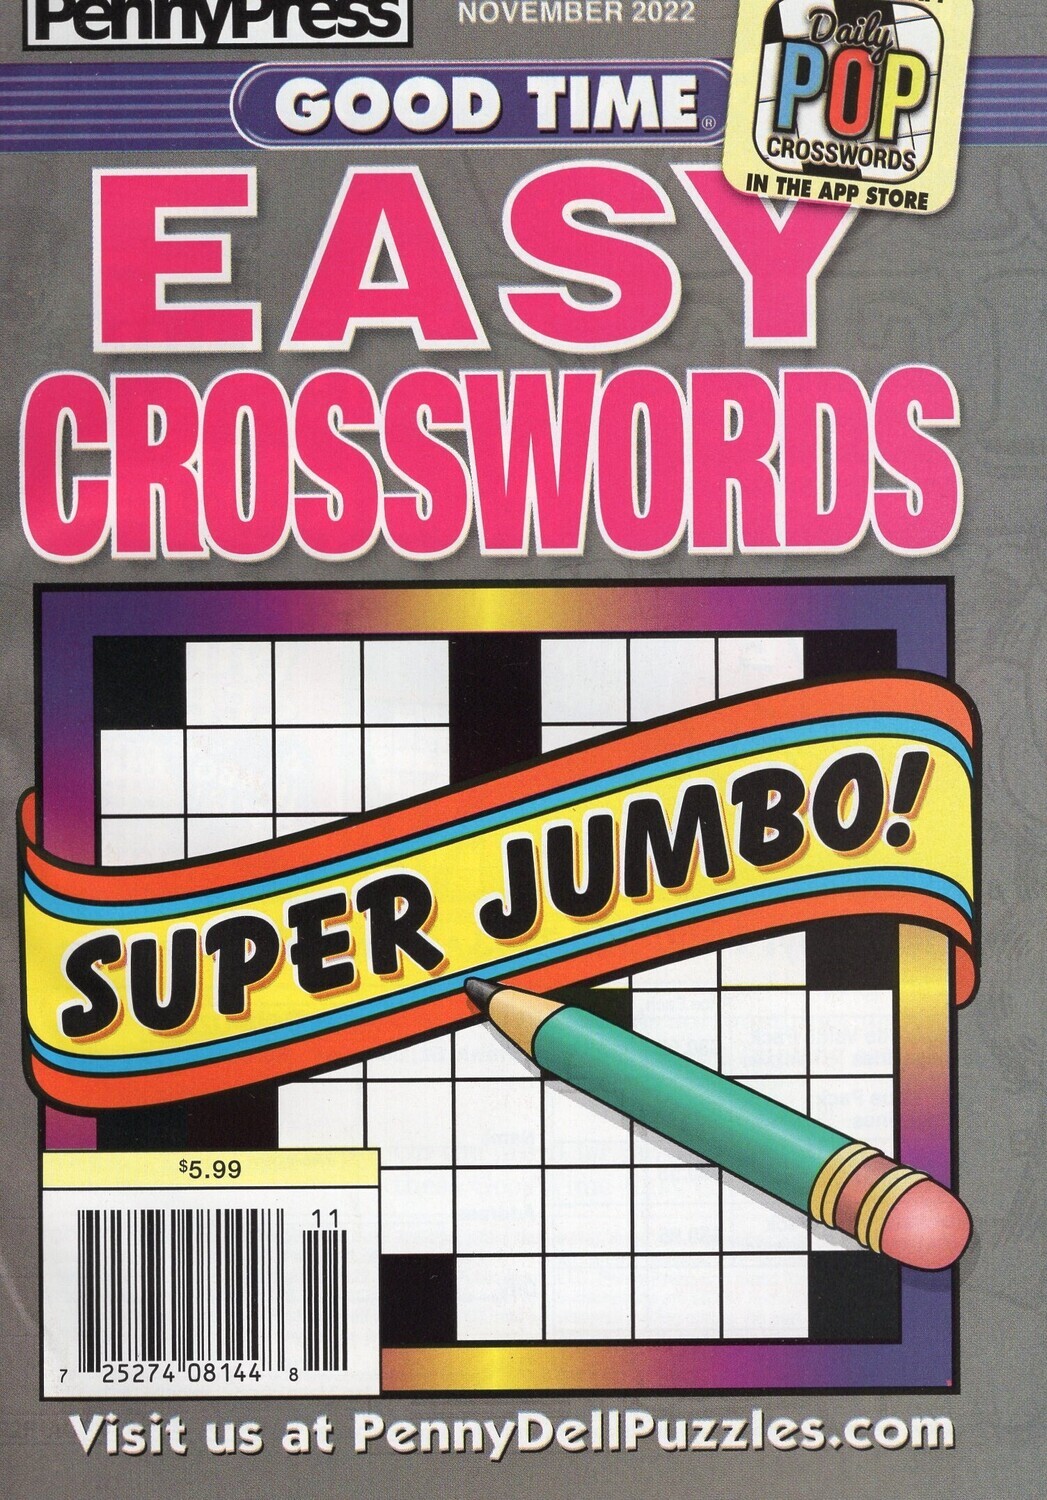 Penny Press Easy Crosswords Nov 2022 -Free Shipping!